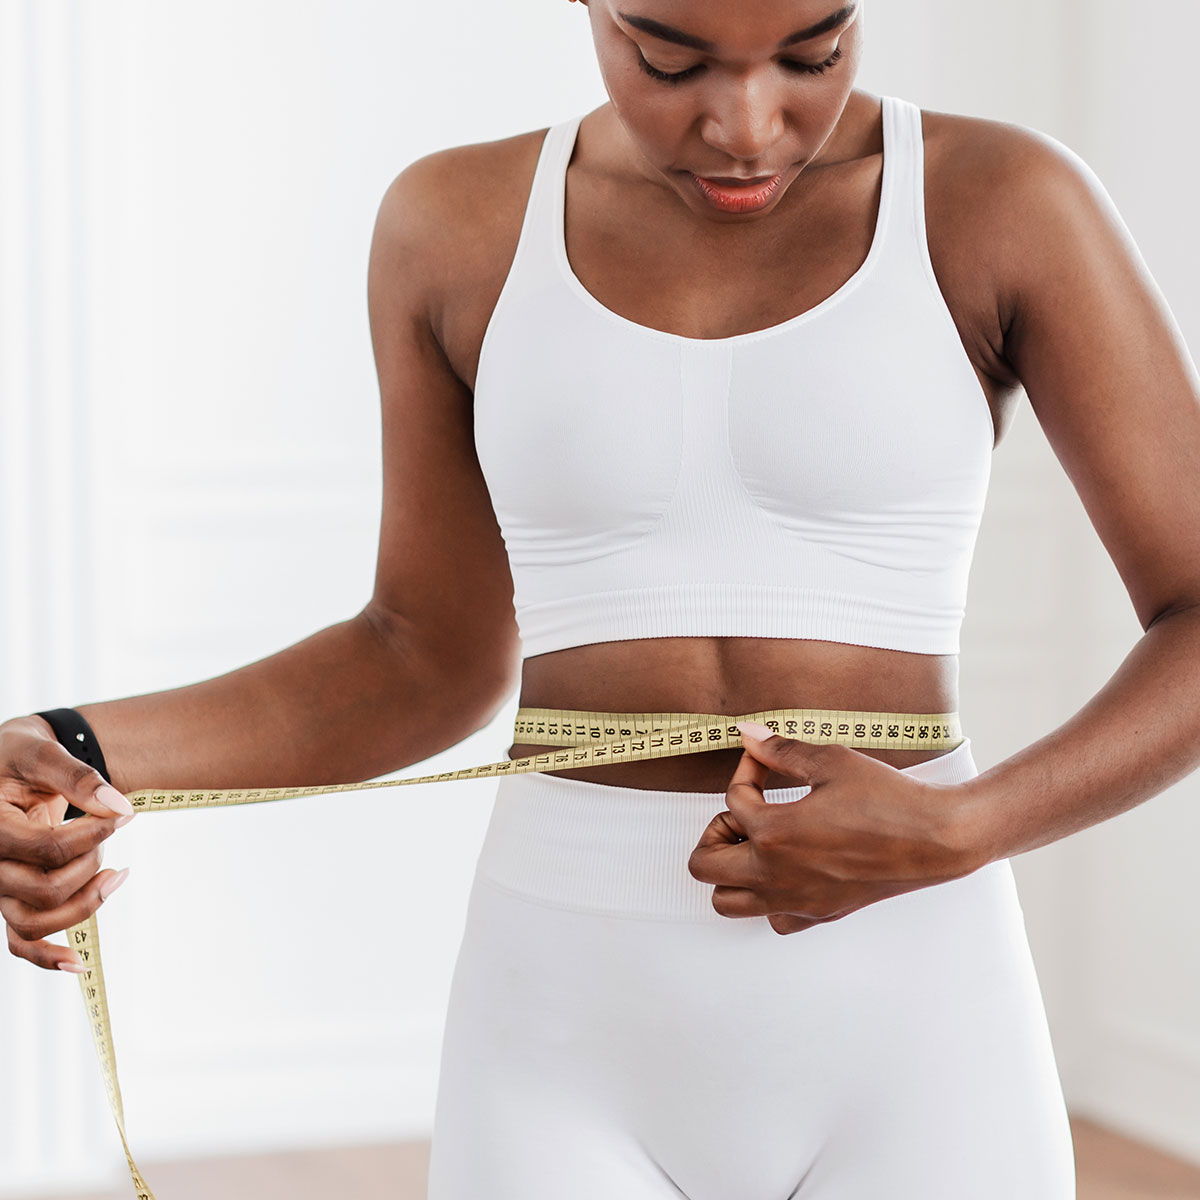 woman white sports bra measuring abdomen with measuring tape